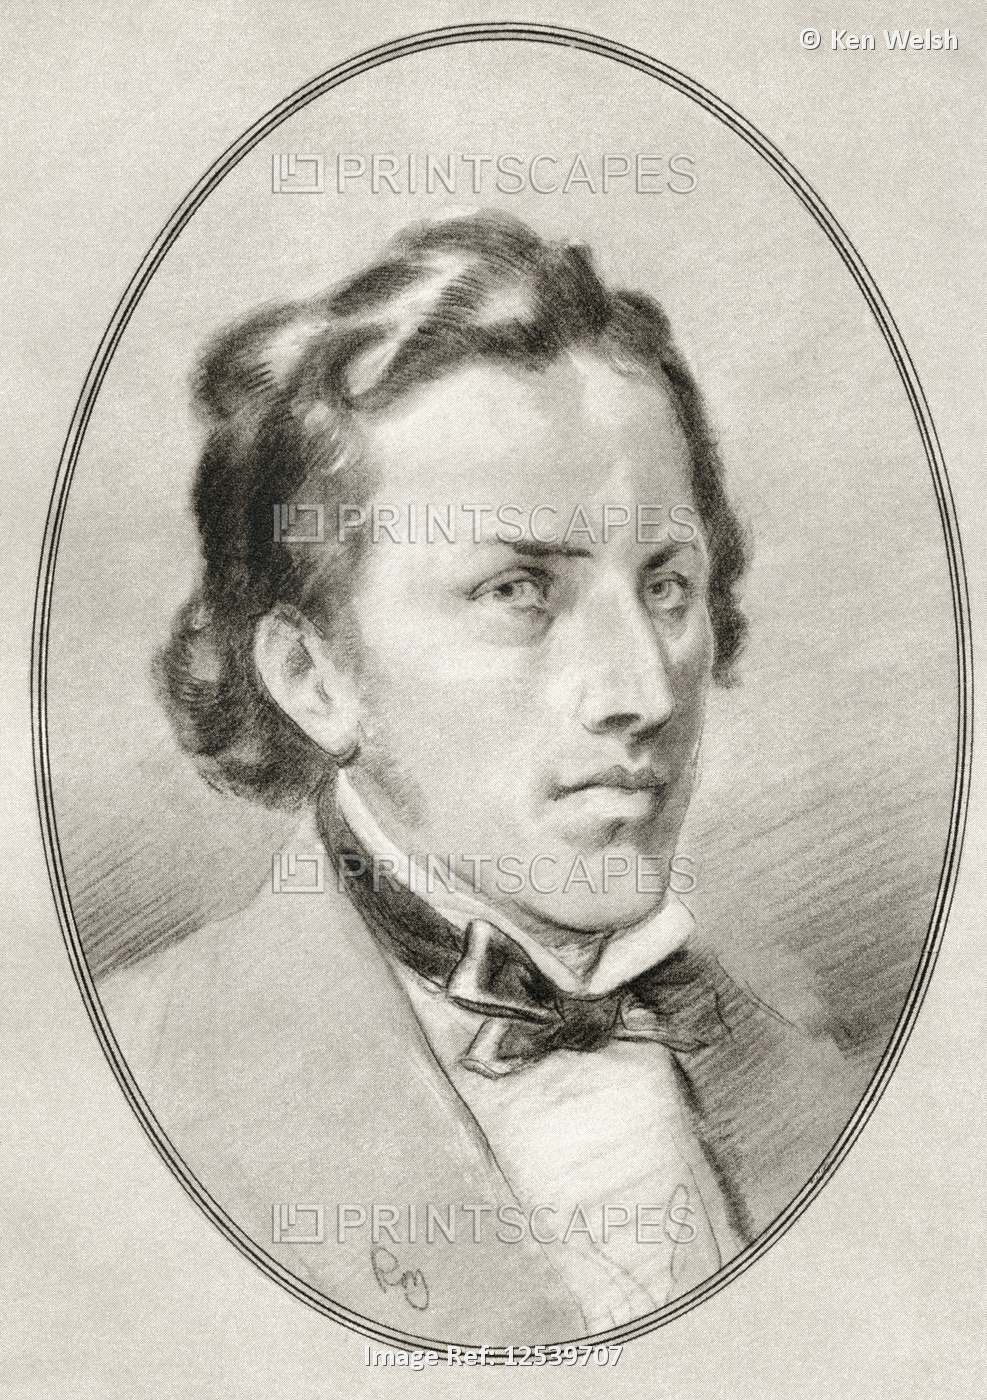 FrÃ©dÃ©ric François Chopin, 1810 - 1849.  Polish composer and virtuoso pianist ...